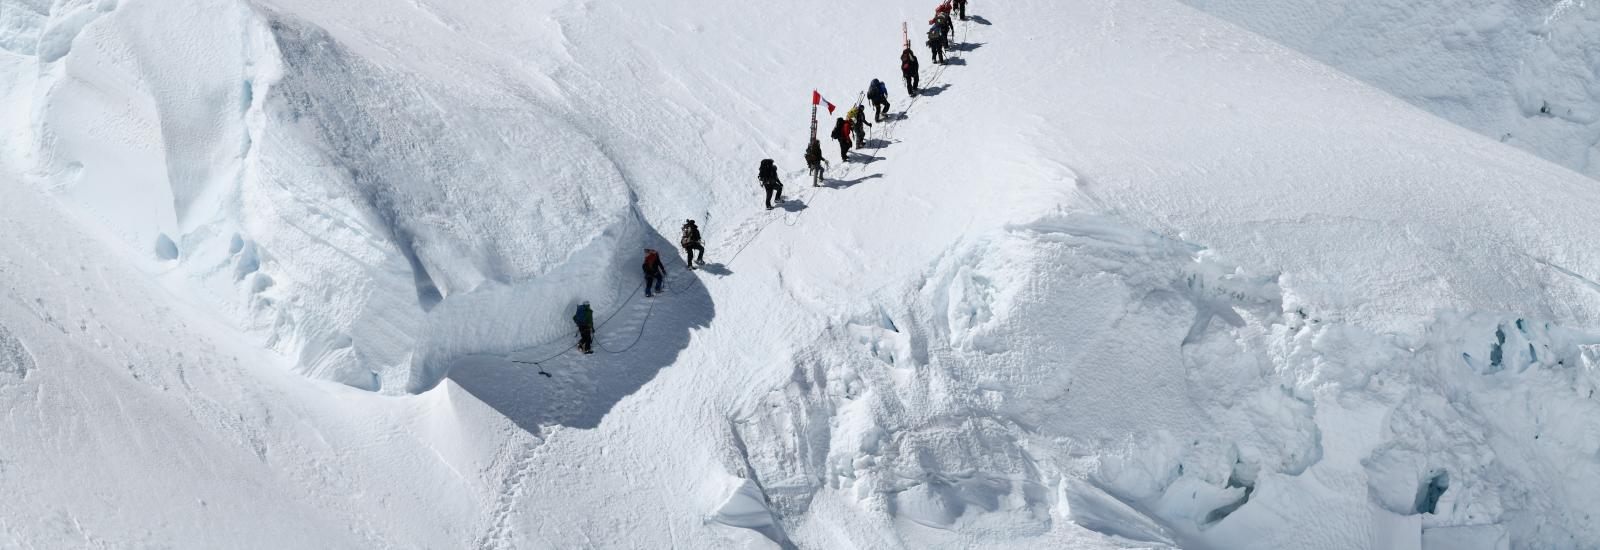 Huascaran Team Climbing on a snowy landscape 